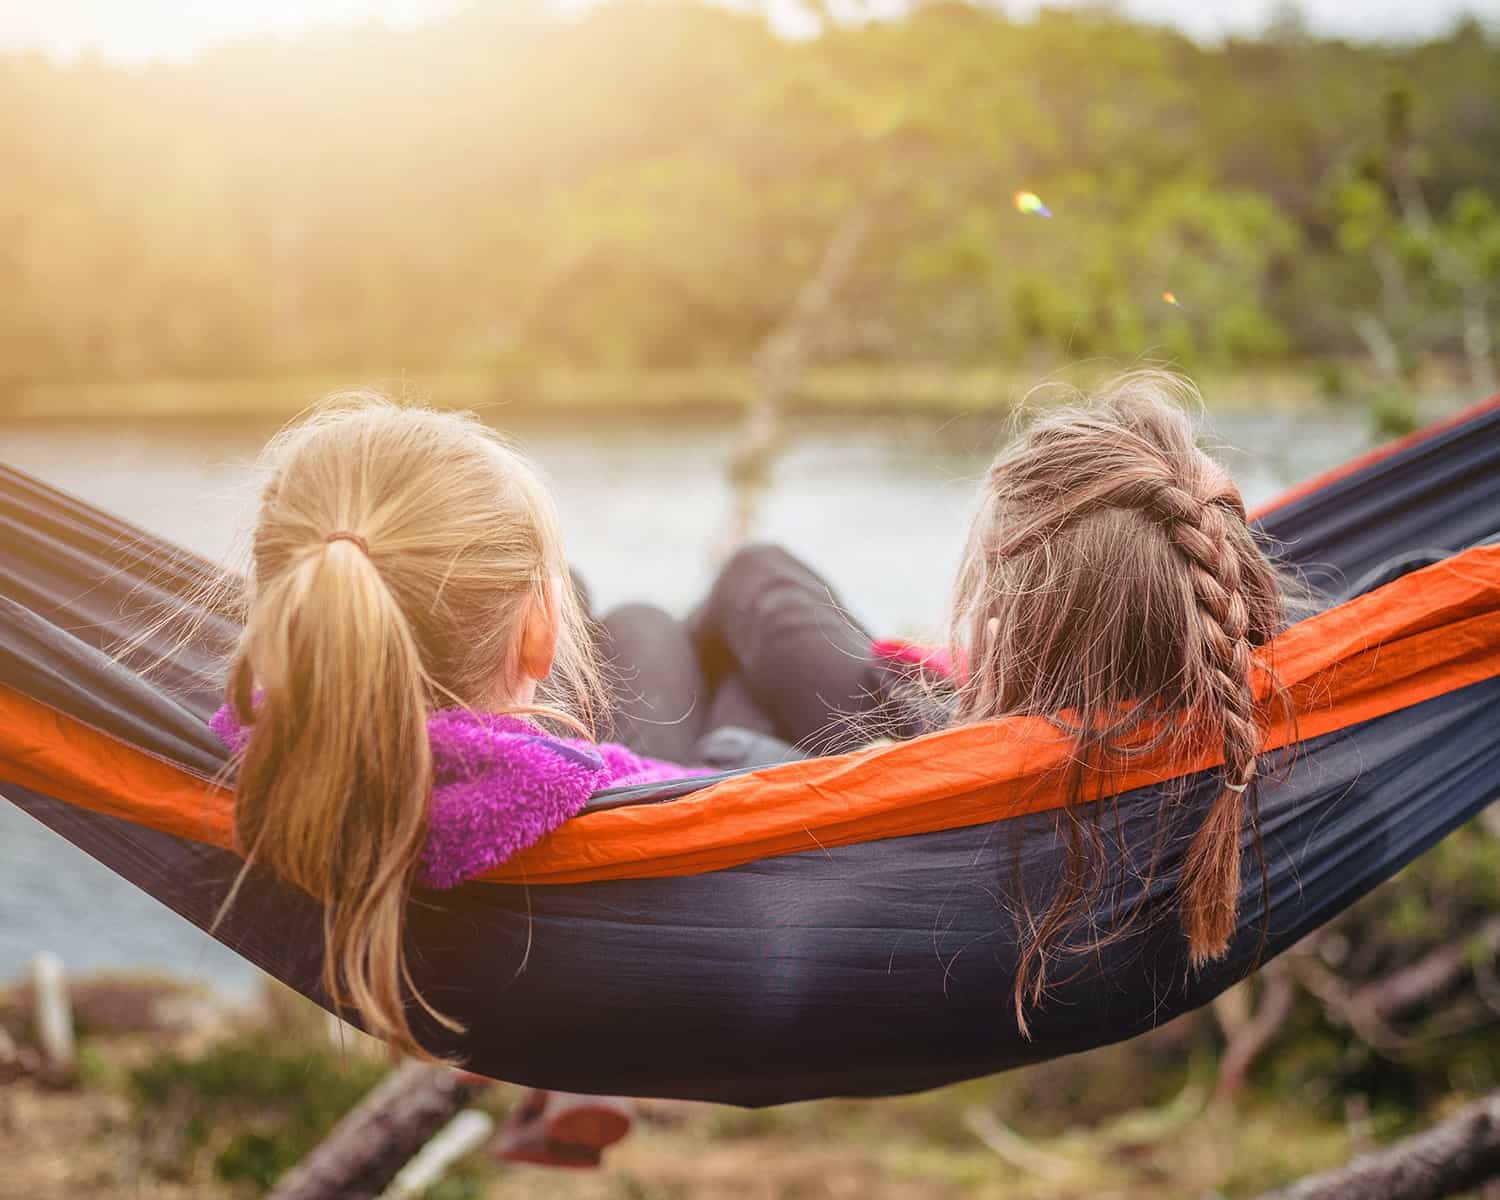 Two kids sitting hammock 